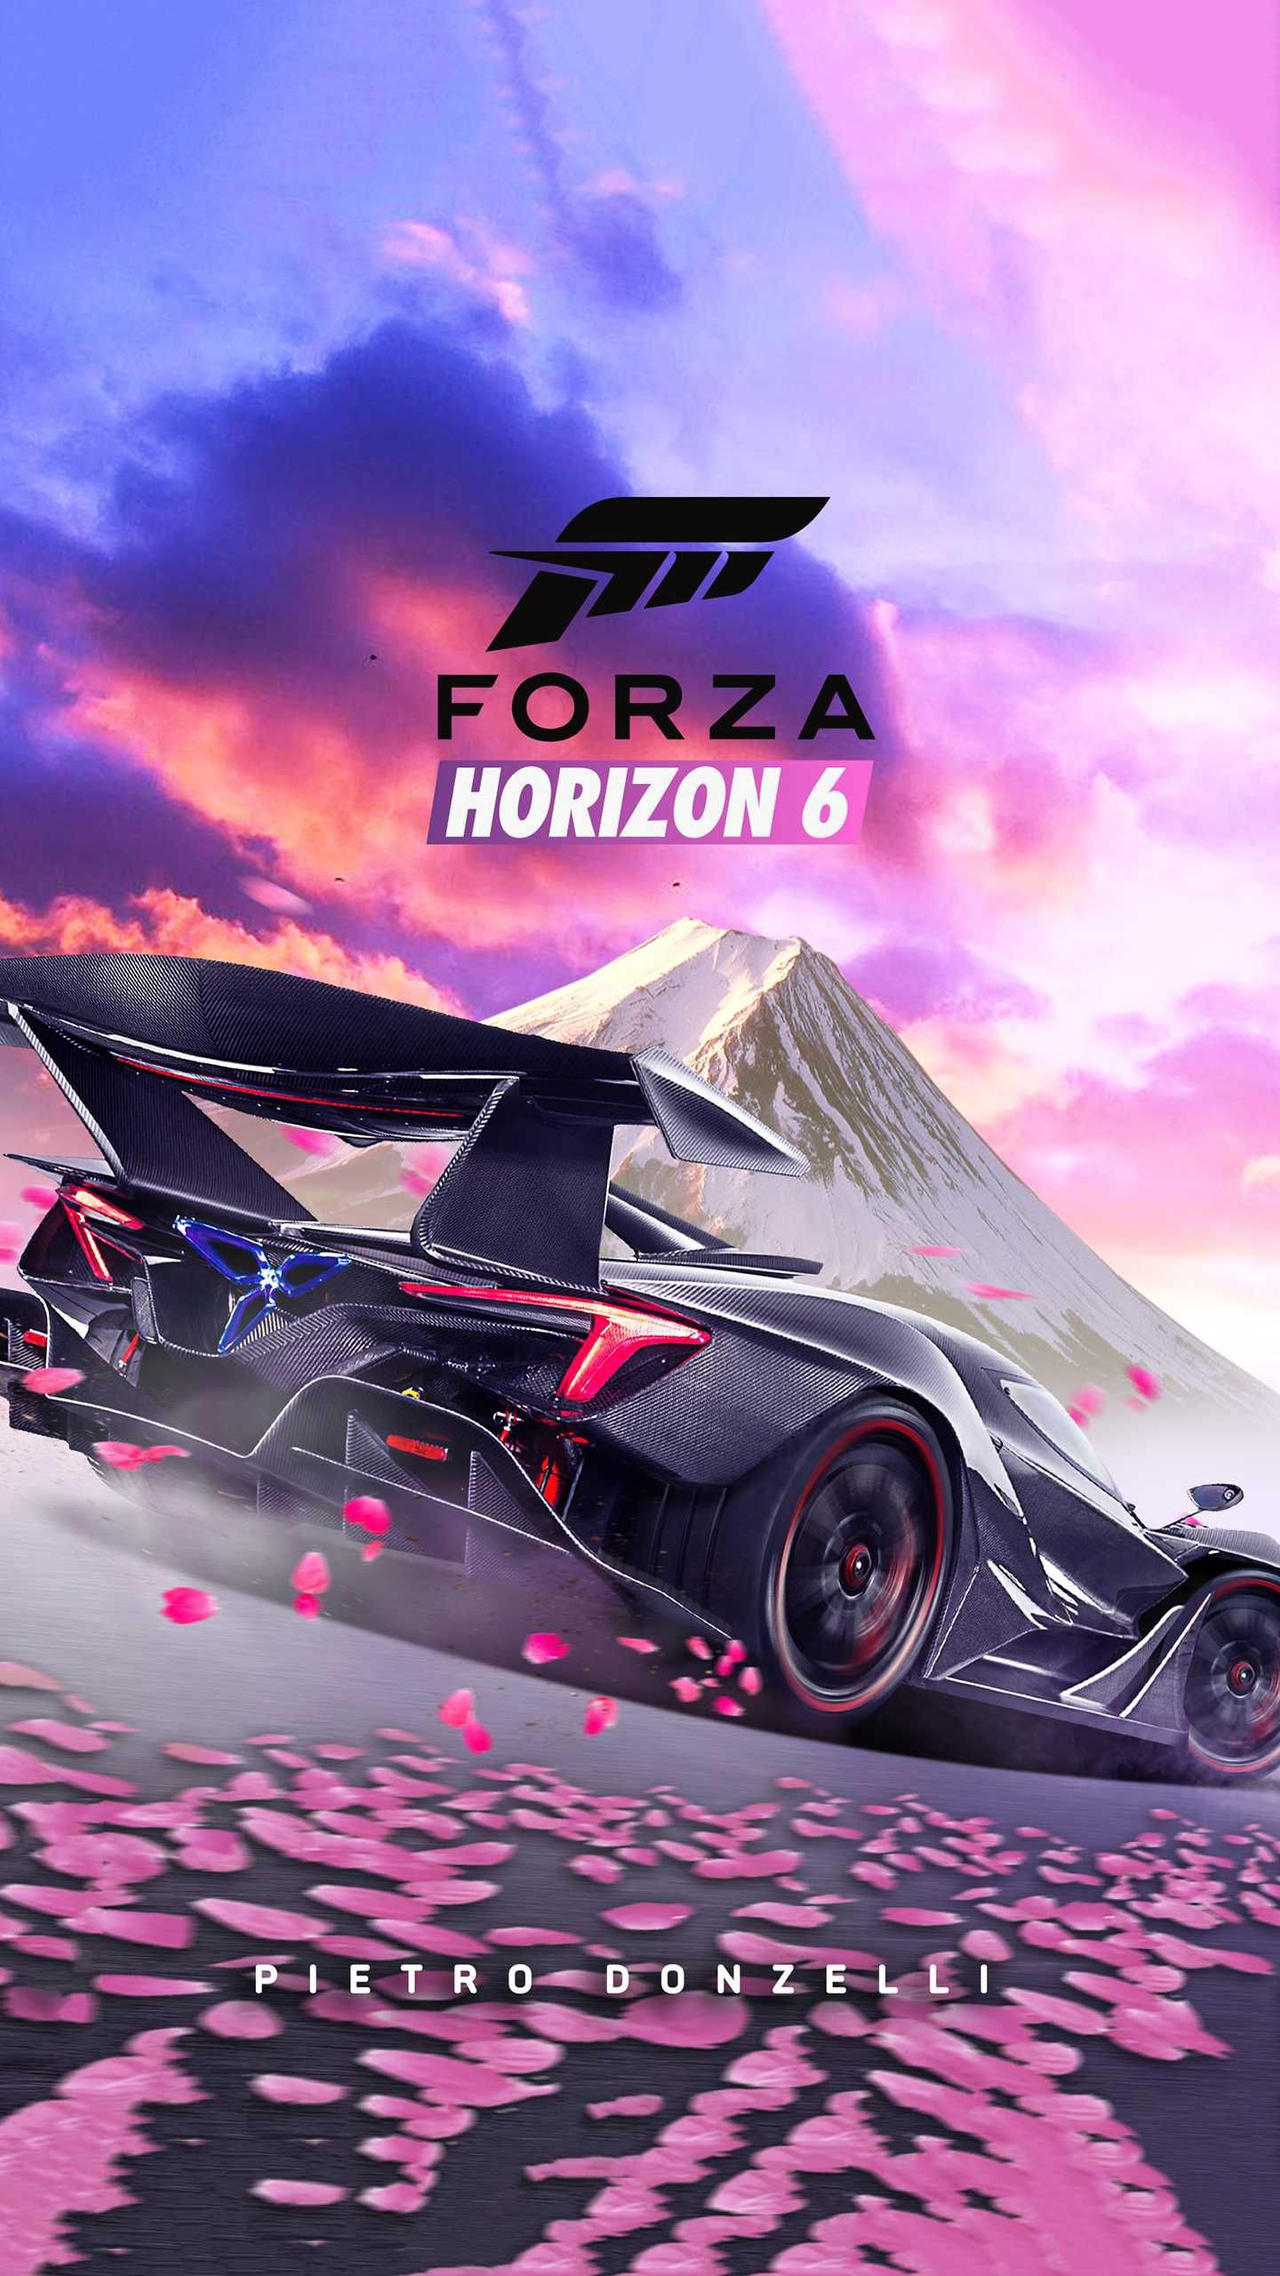 Forza Horizon 6 Leaks in New Job Listing